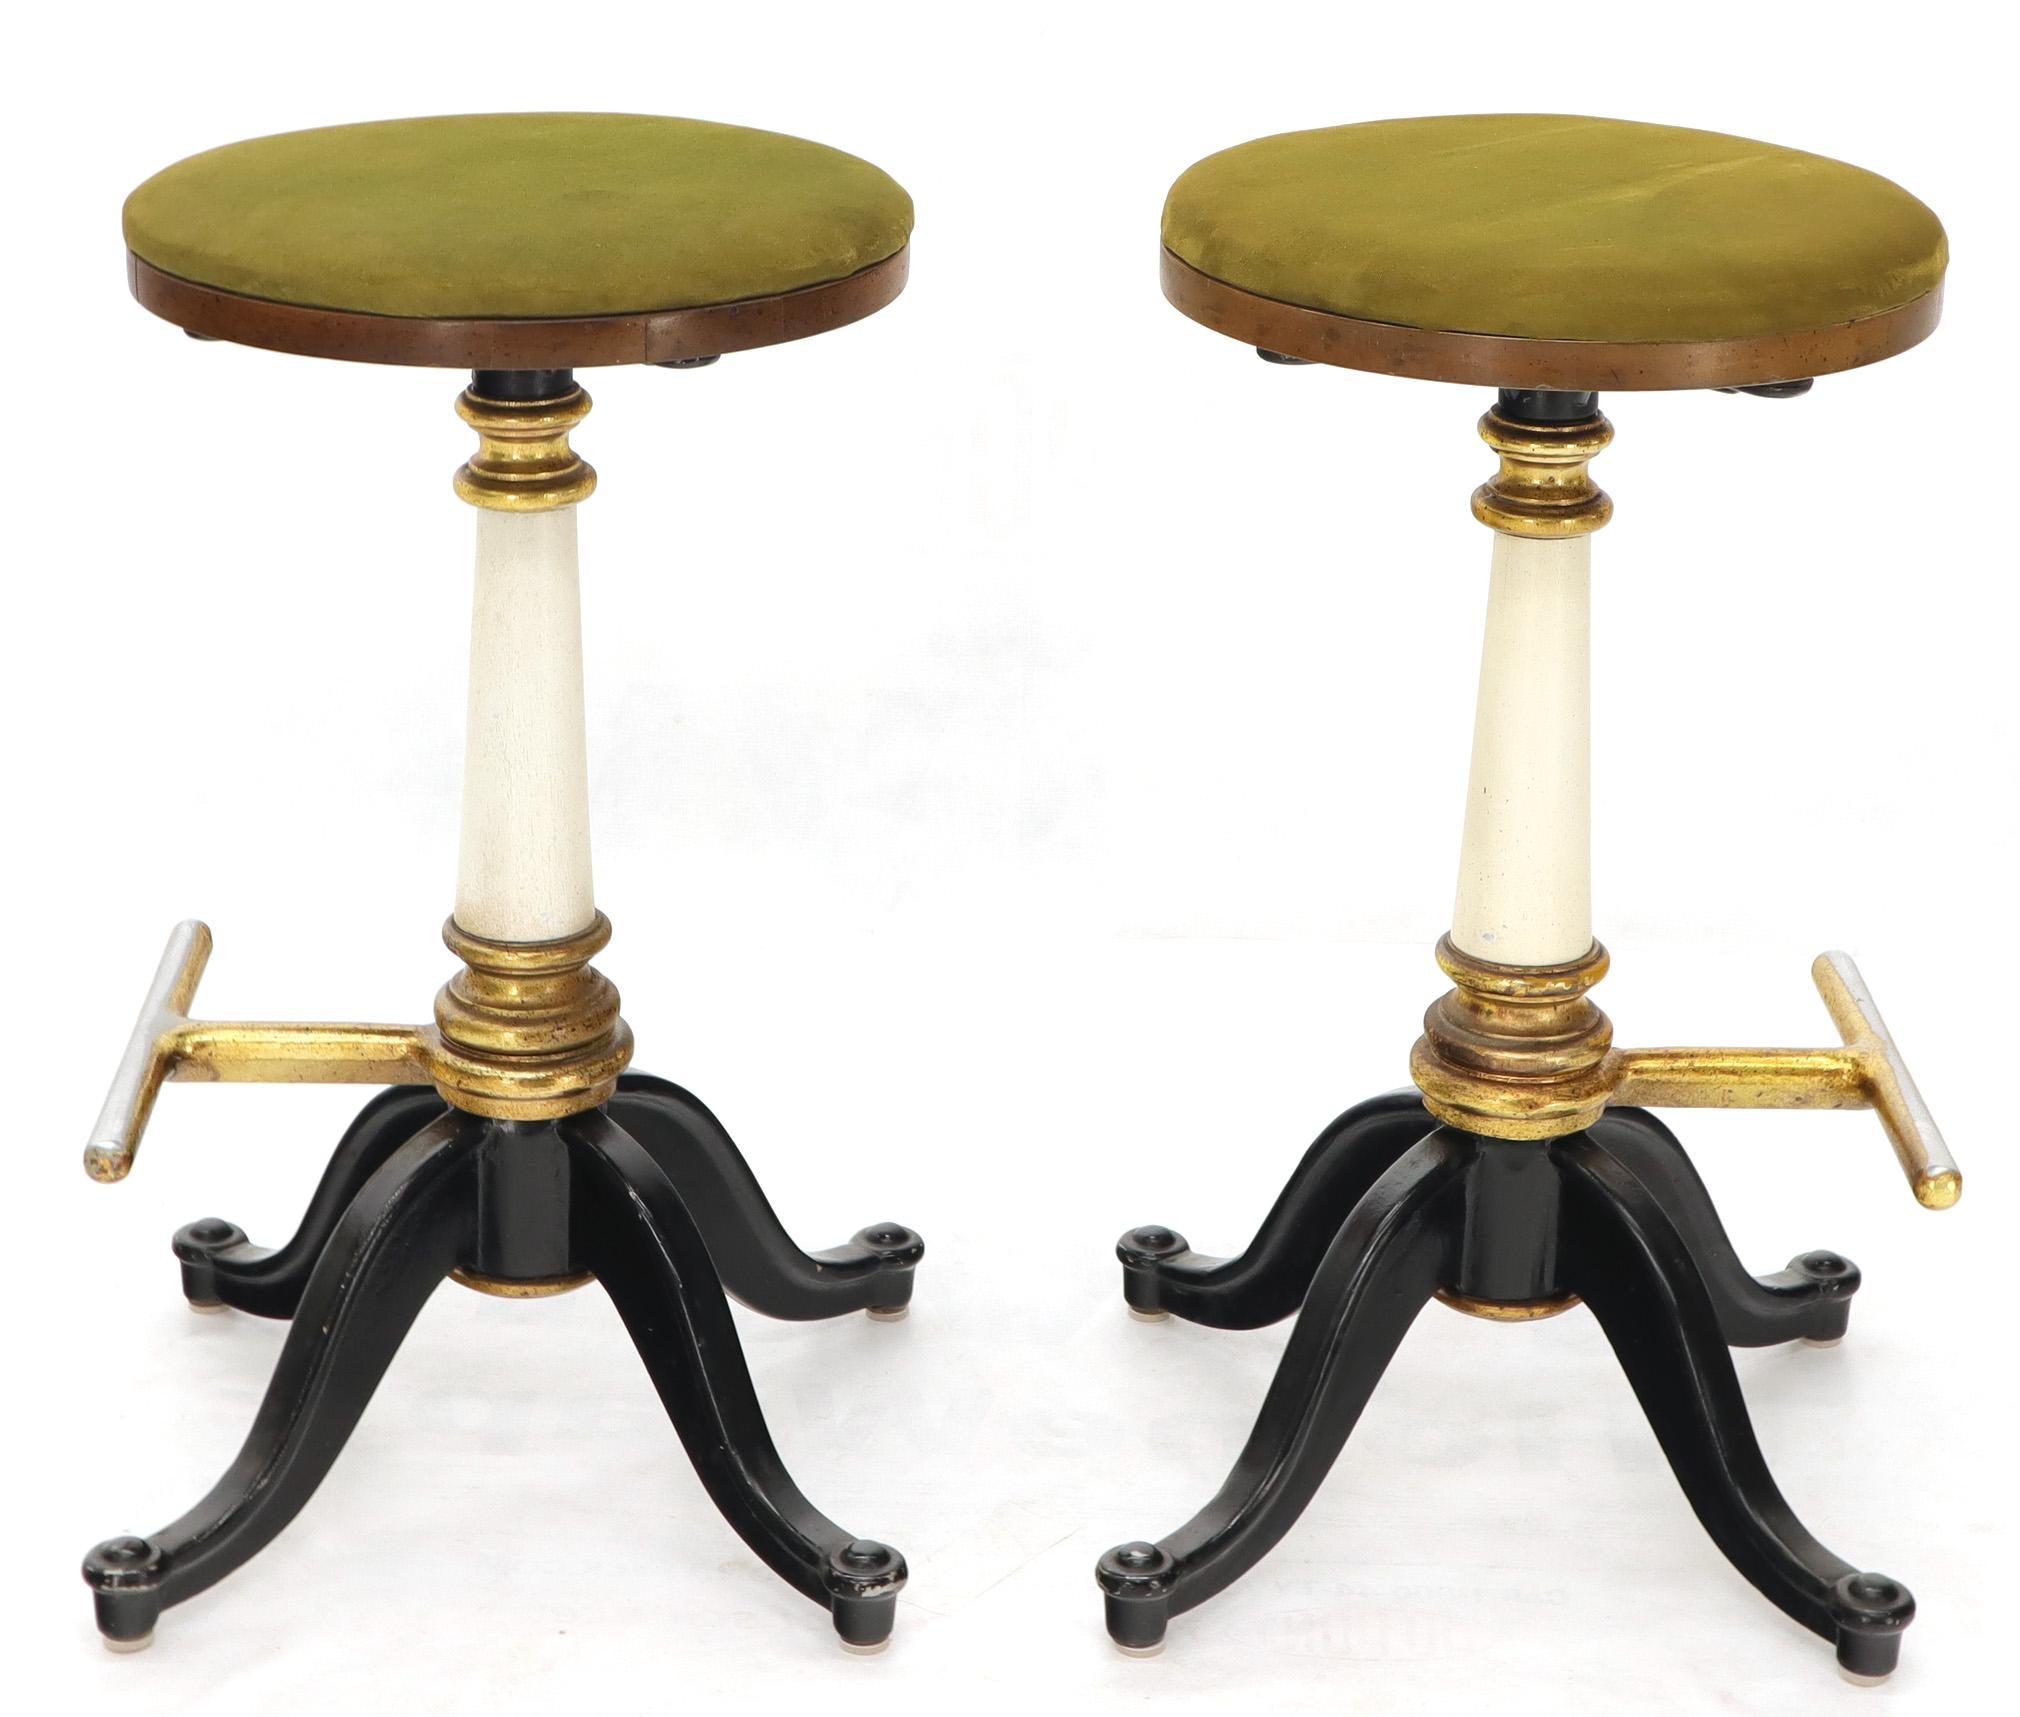 Pair of decorative vintage Mid-Century Modern bar stools on 4 cast iron legs base.